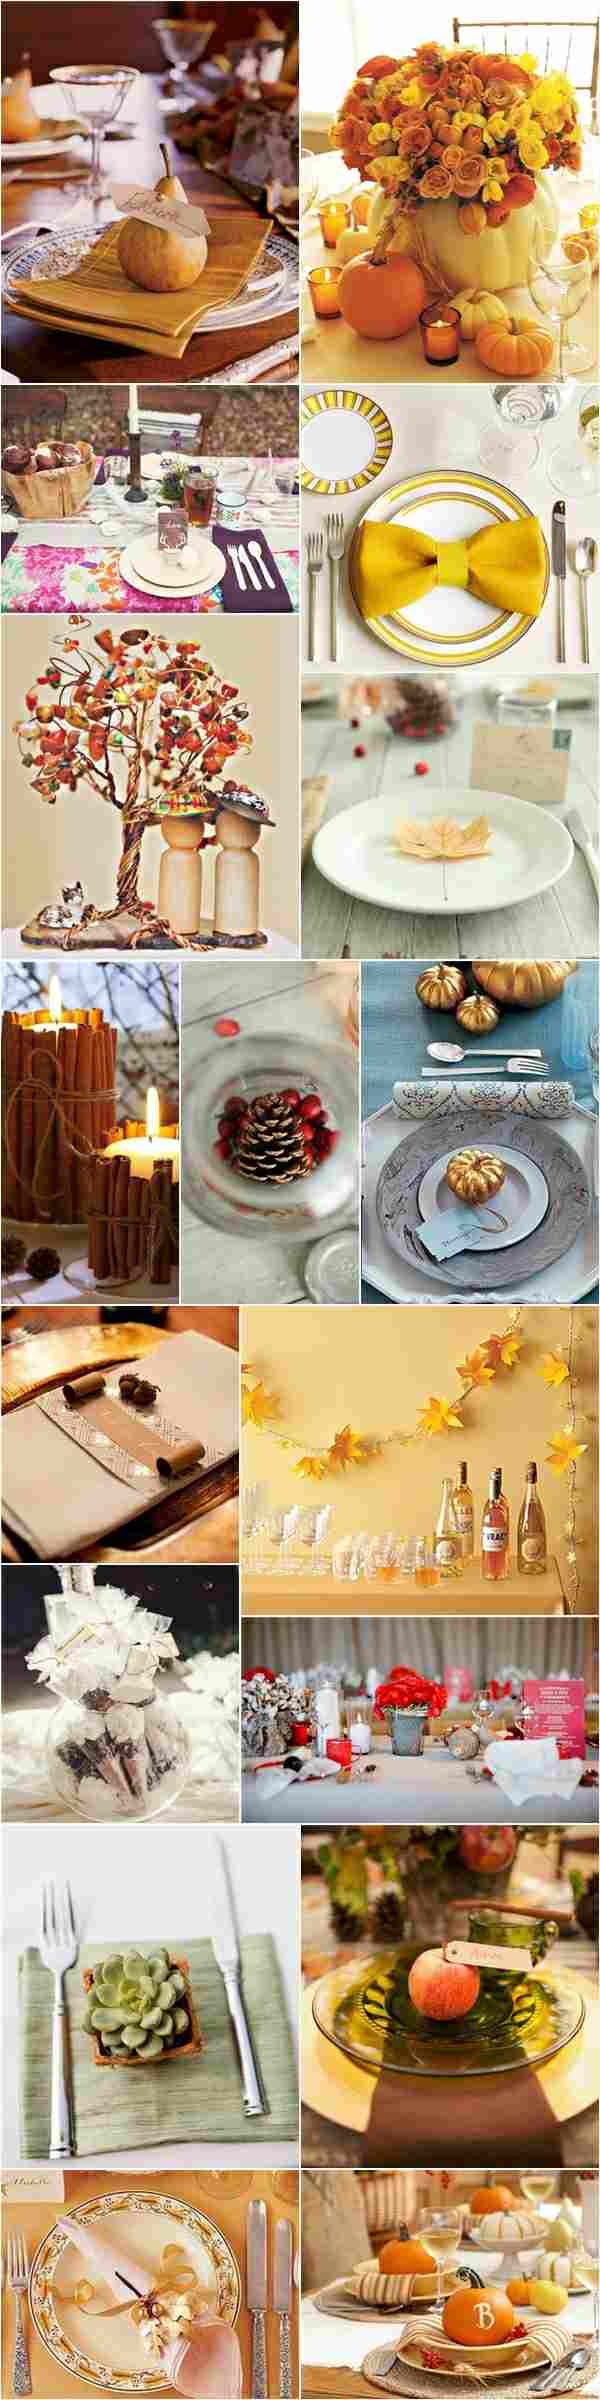 Bestik-indretning-ideer-bord-dekorationer-til-brylluppet